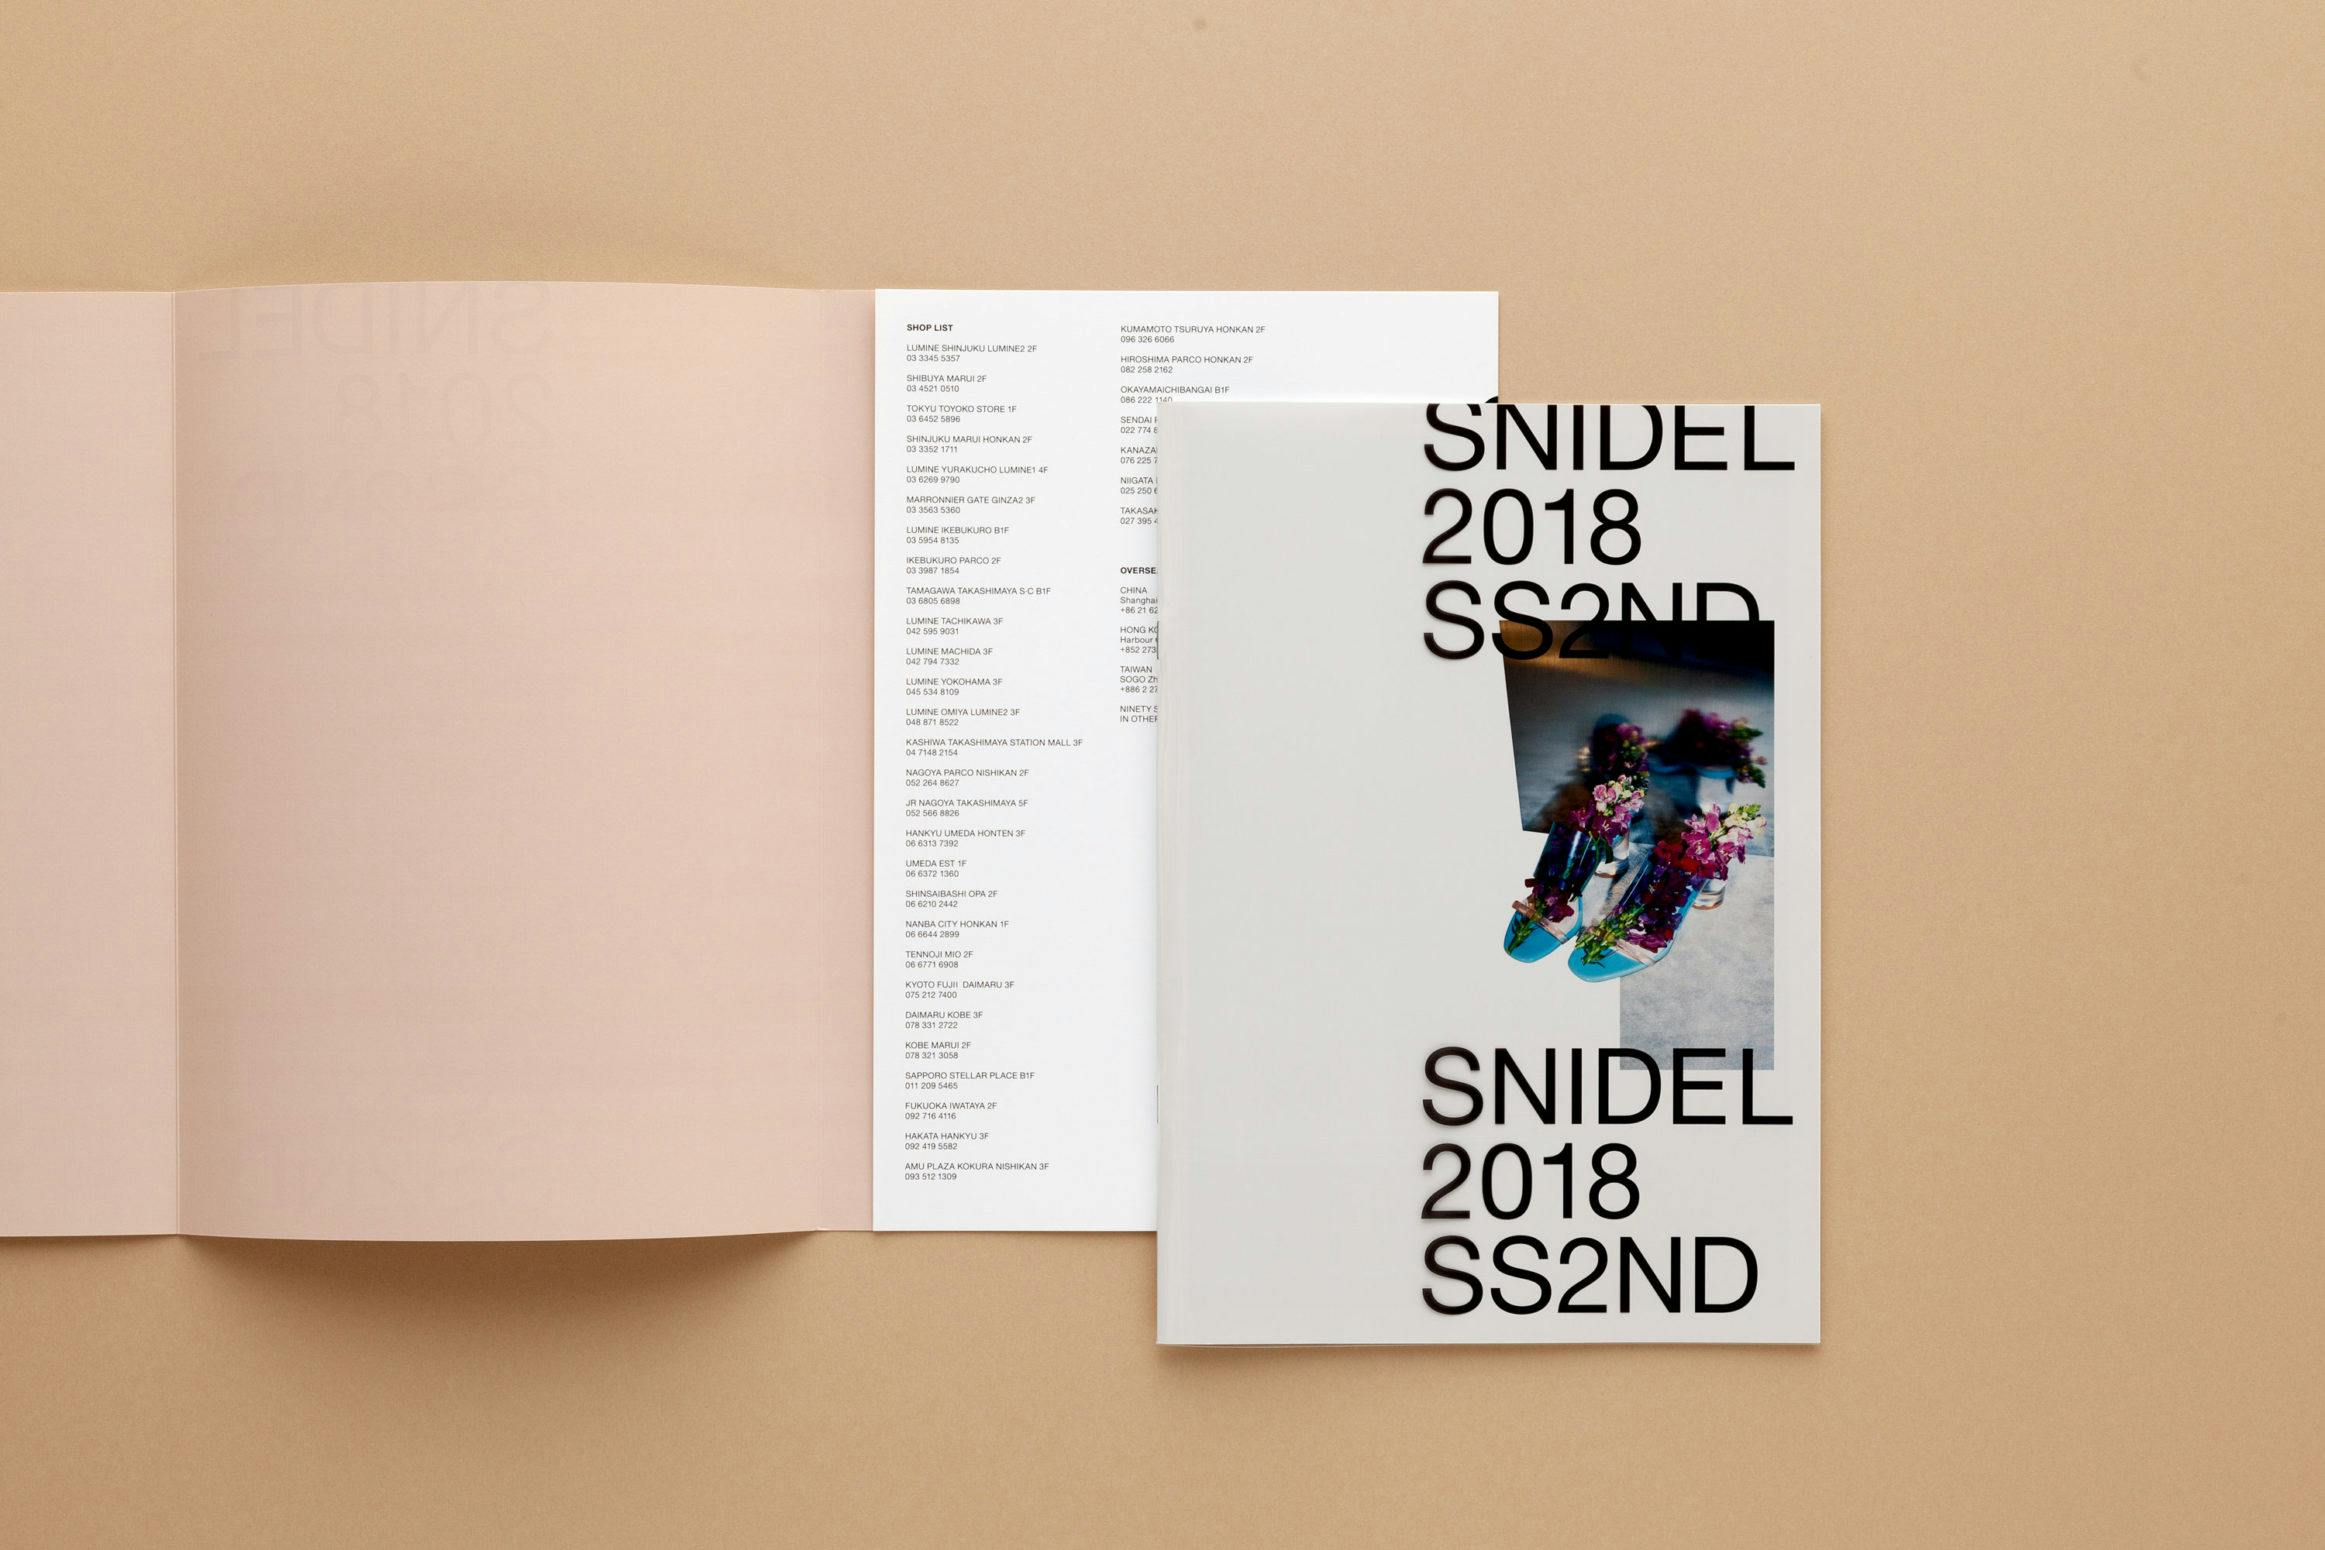 SNIDEL 2018 SS 2ND